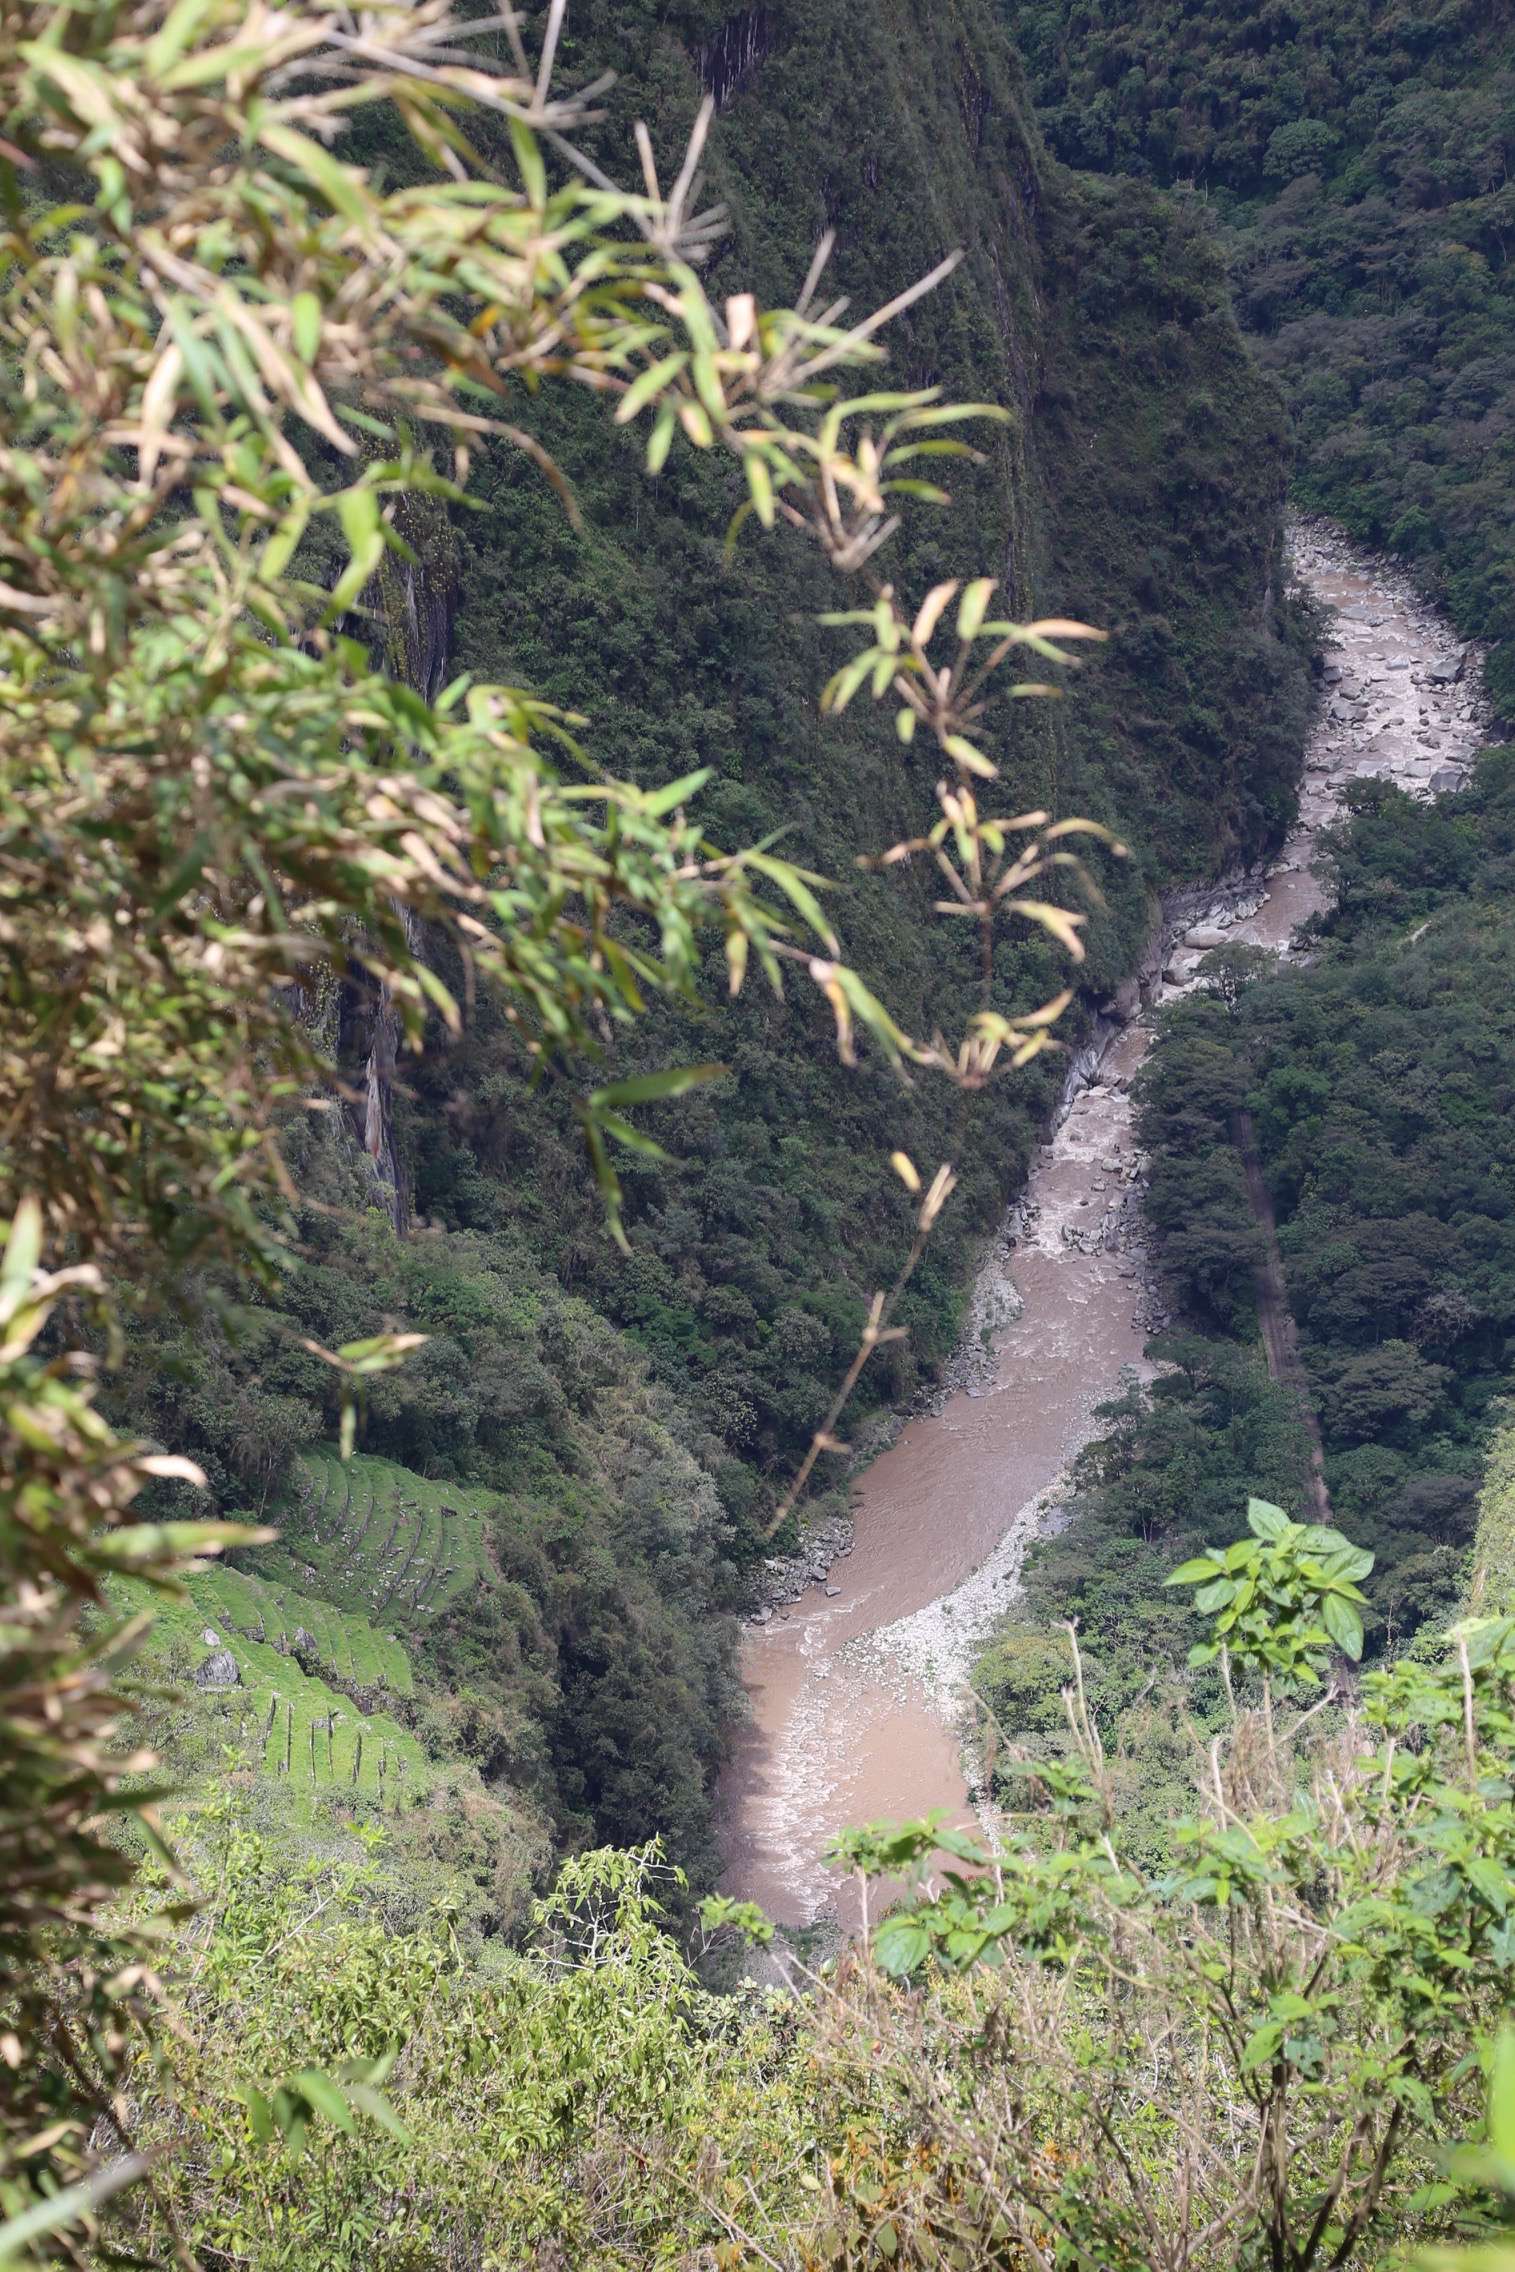 The Urubamba River, 2,000 feet below Machu Picchu provided rocks to work the building stones.